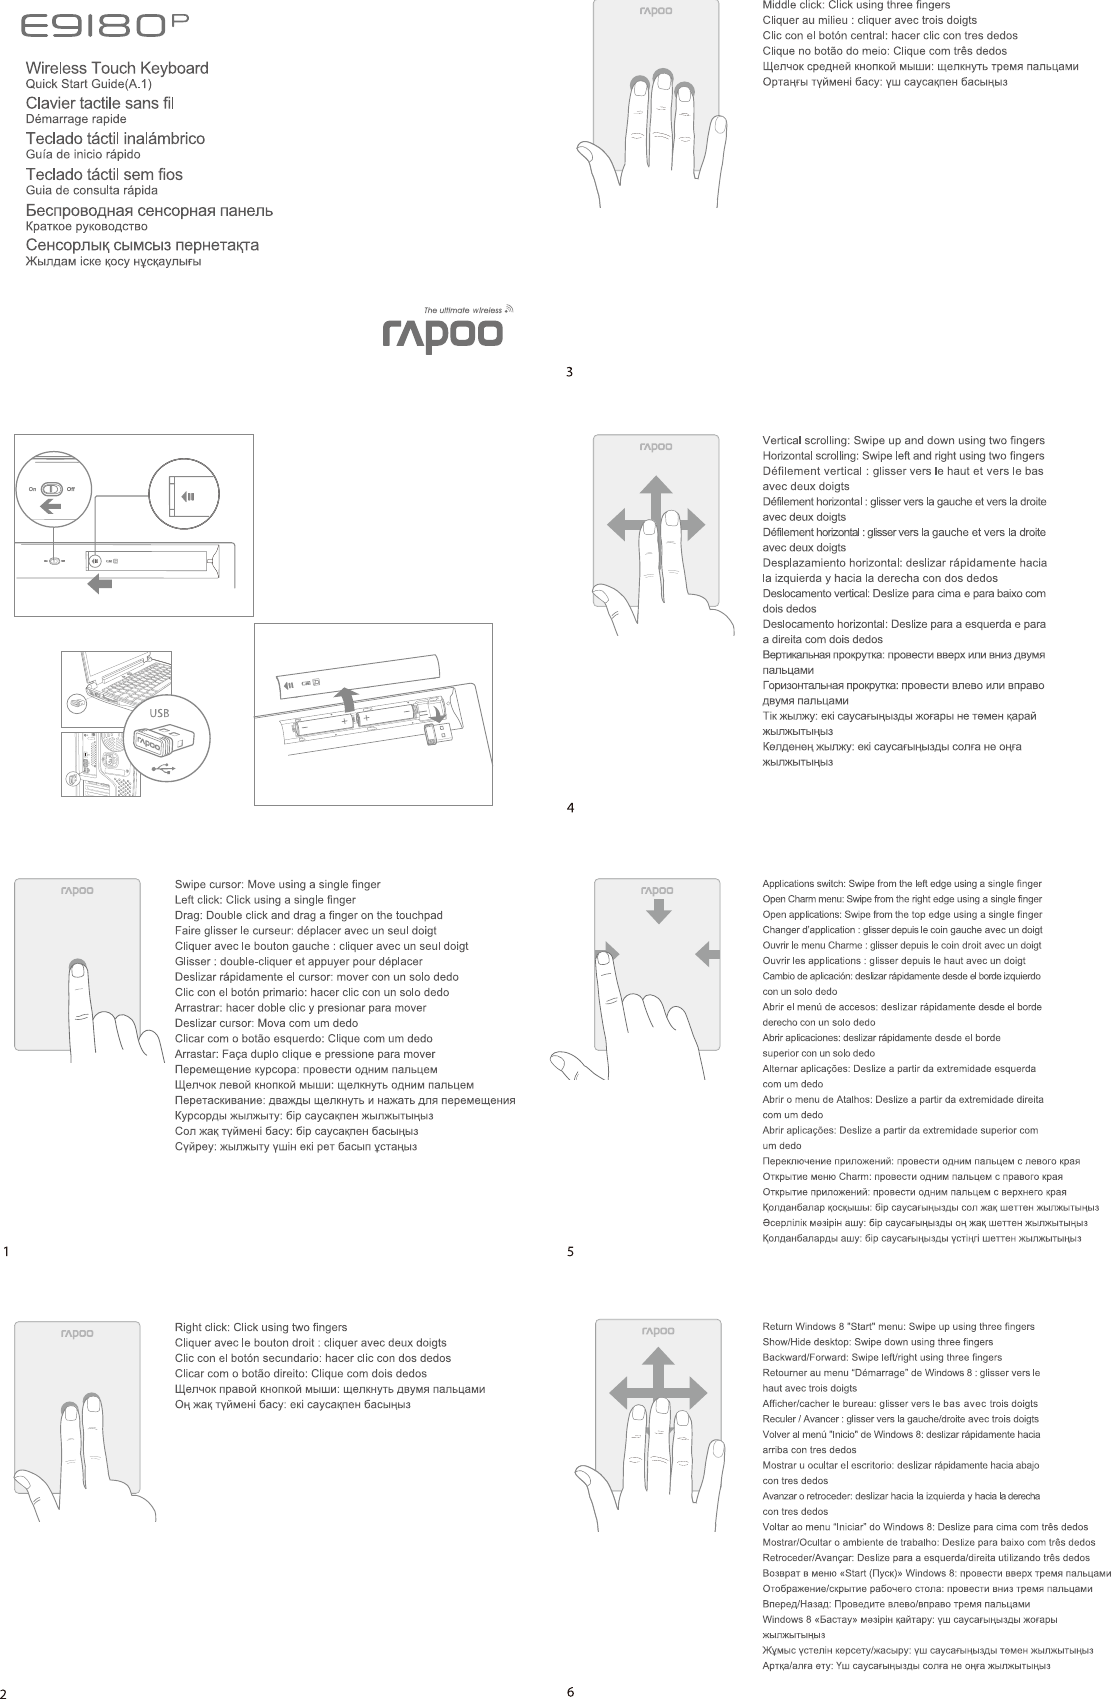 adobe illustrator cs4 user manual